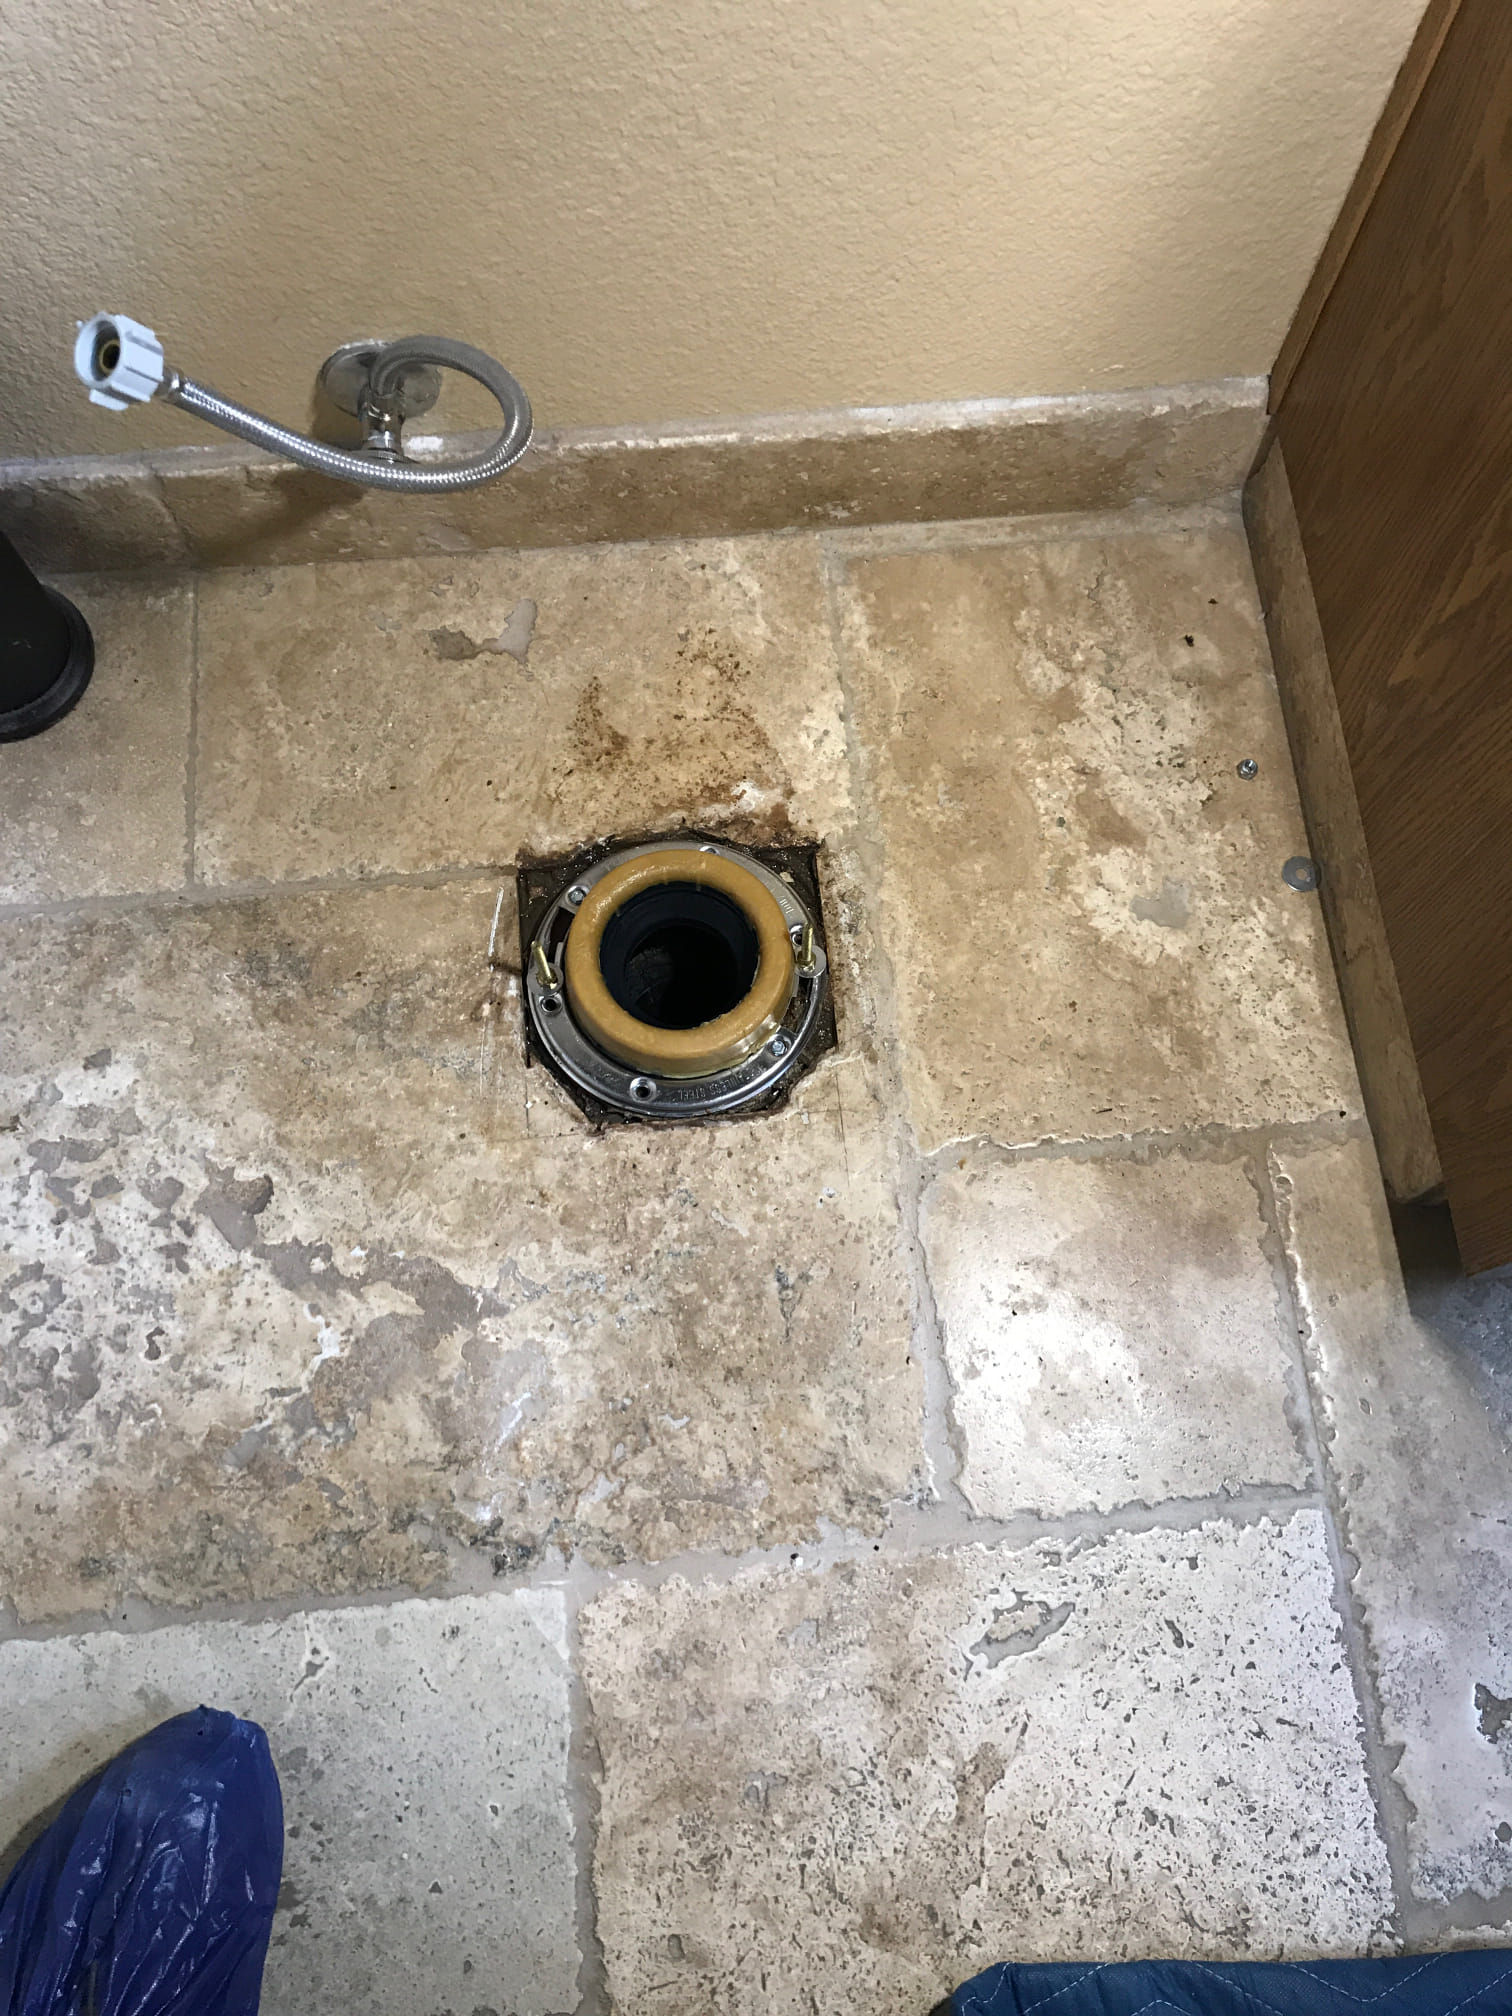 Leaking Toilet in Stockton, CA